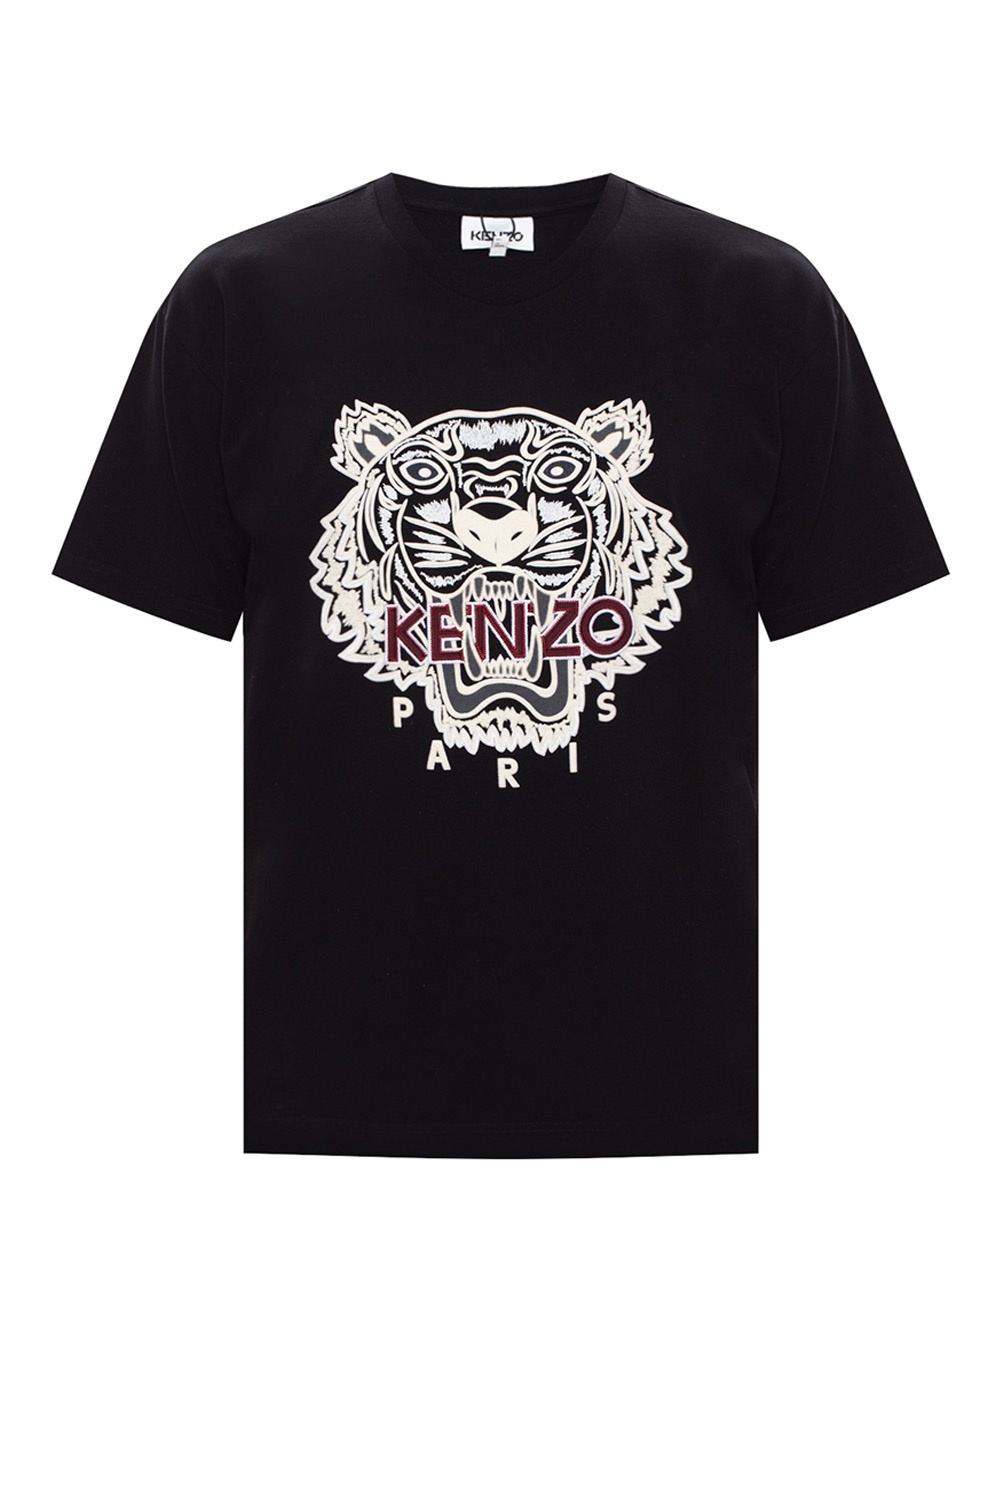 kenzo shirt price in india